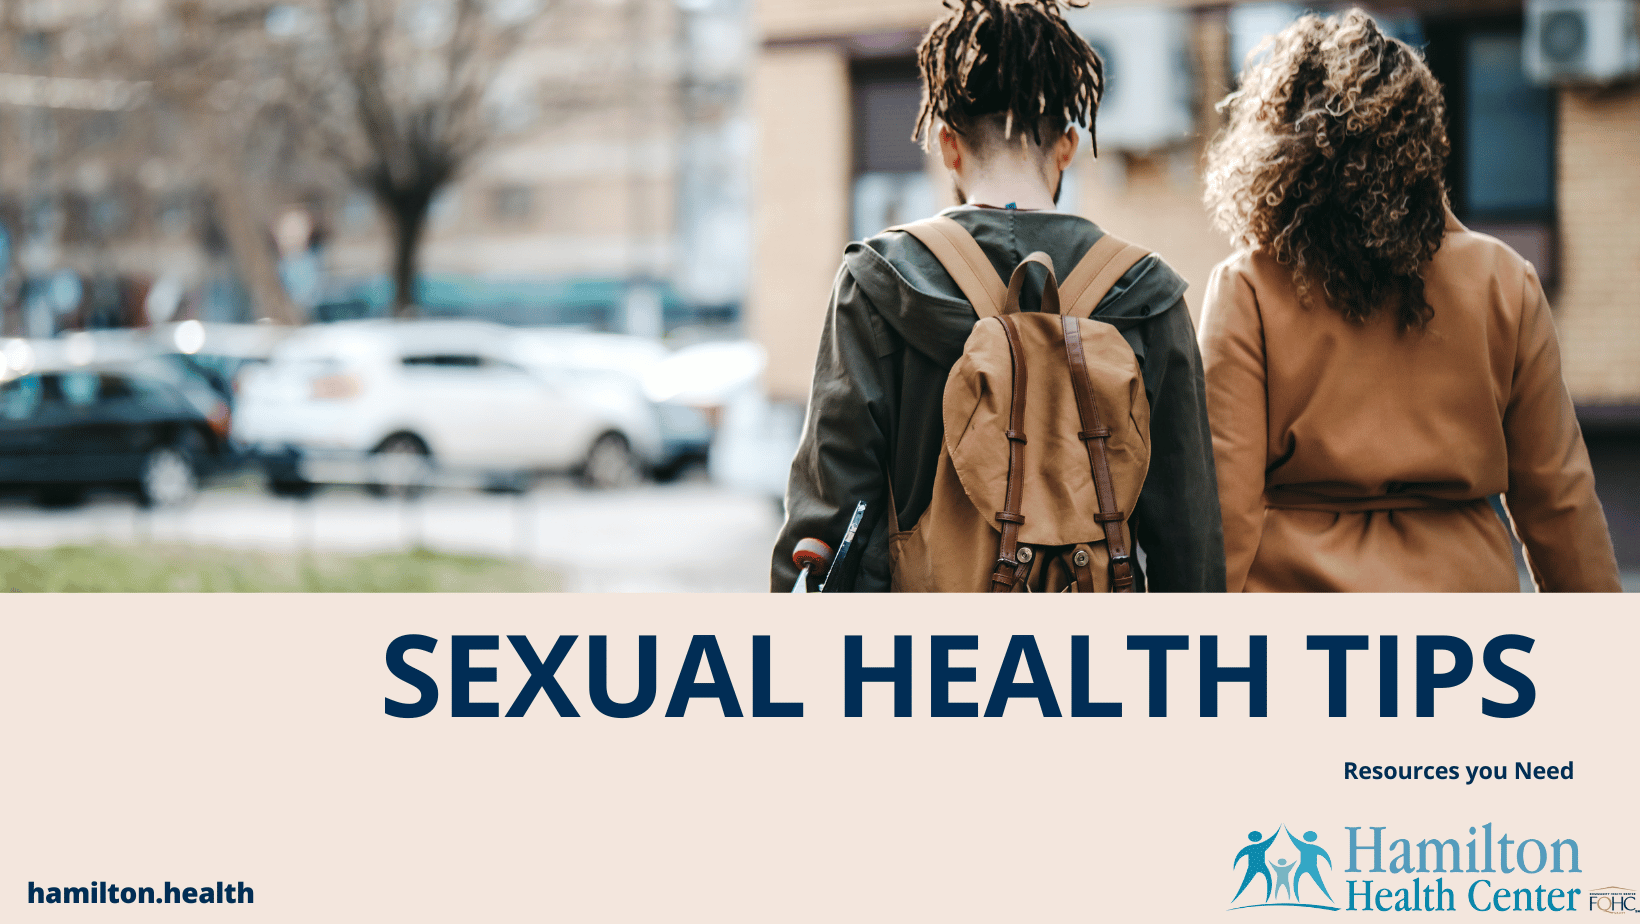 Top Sexual Health Tips - Hamilton Health